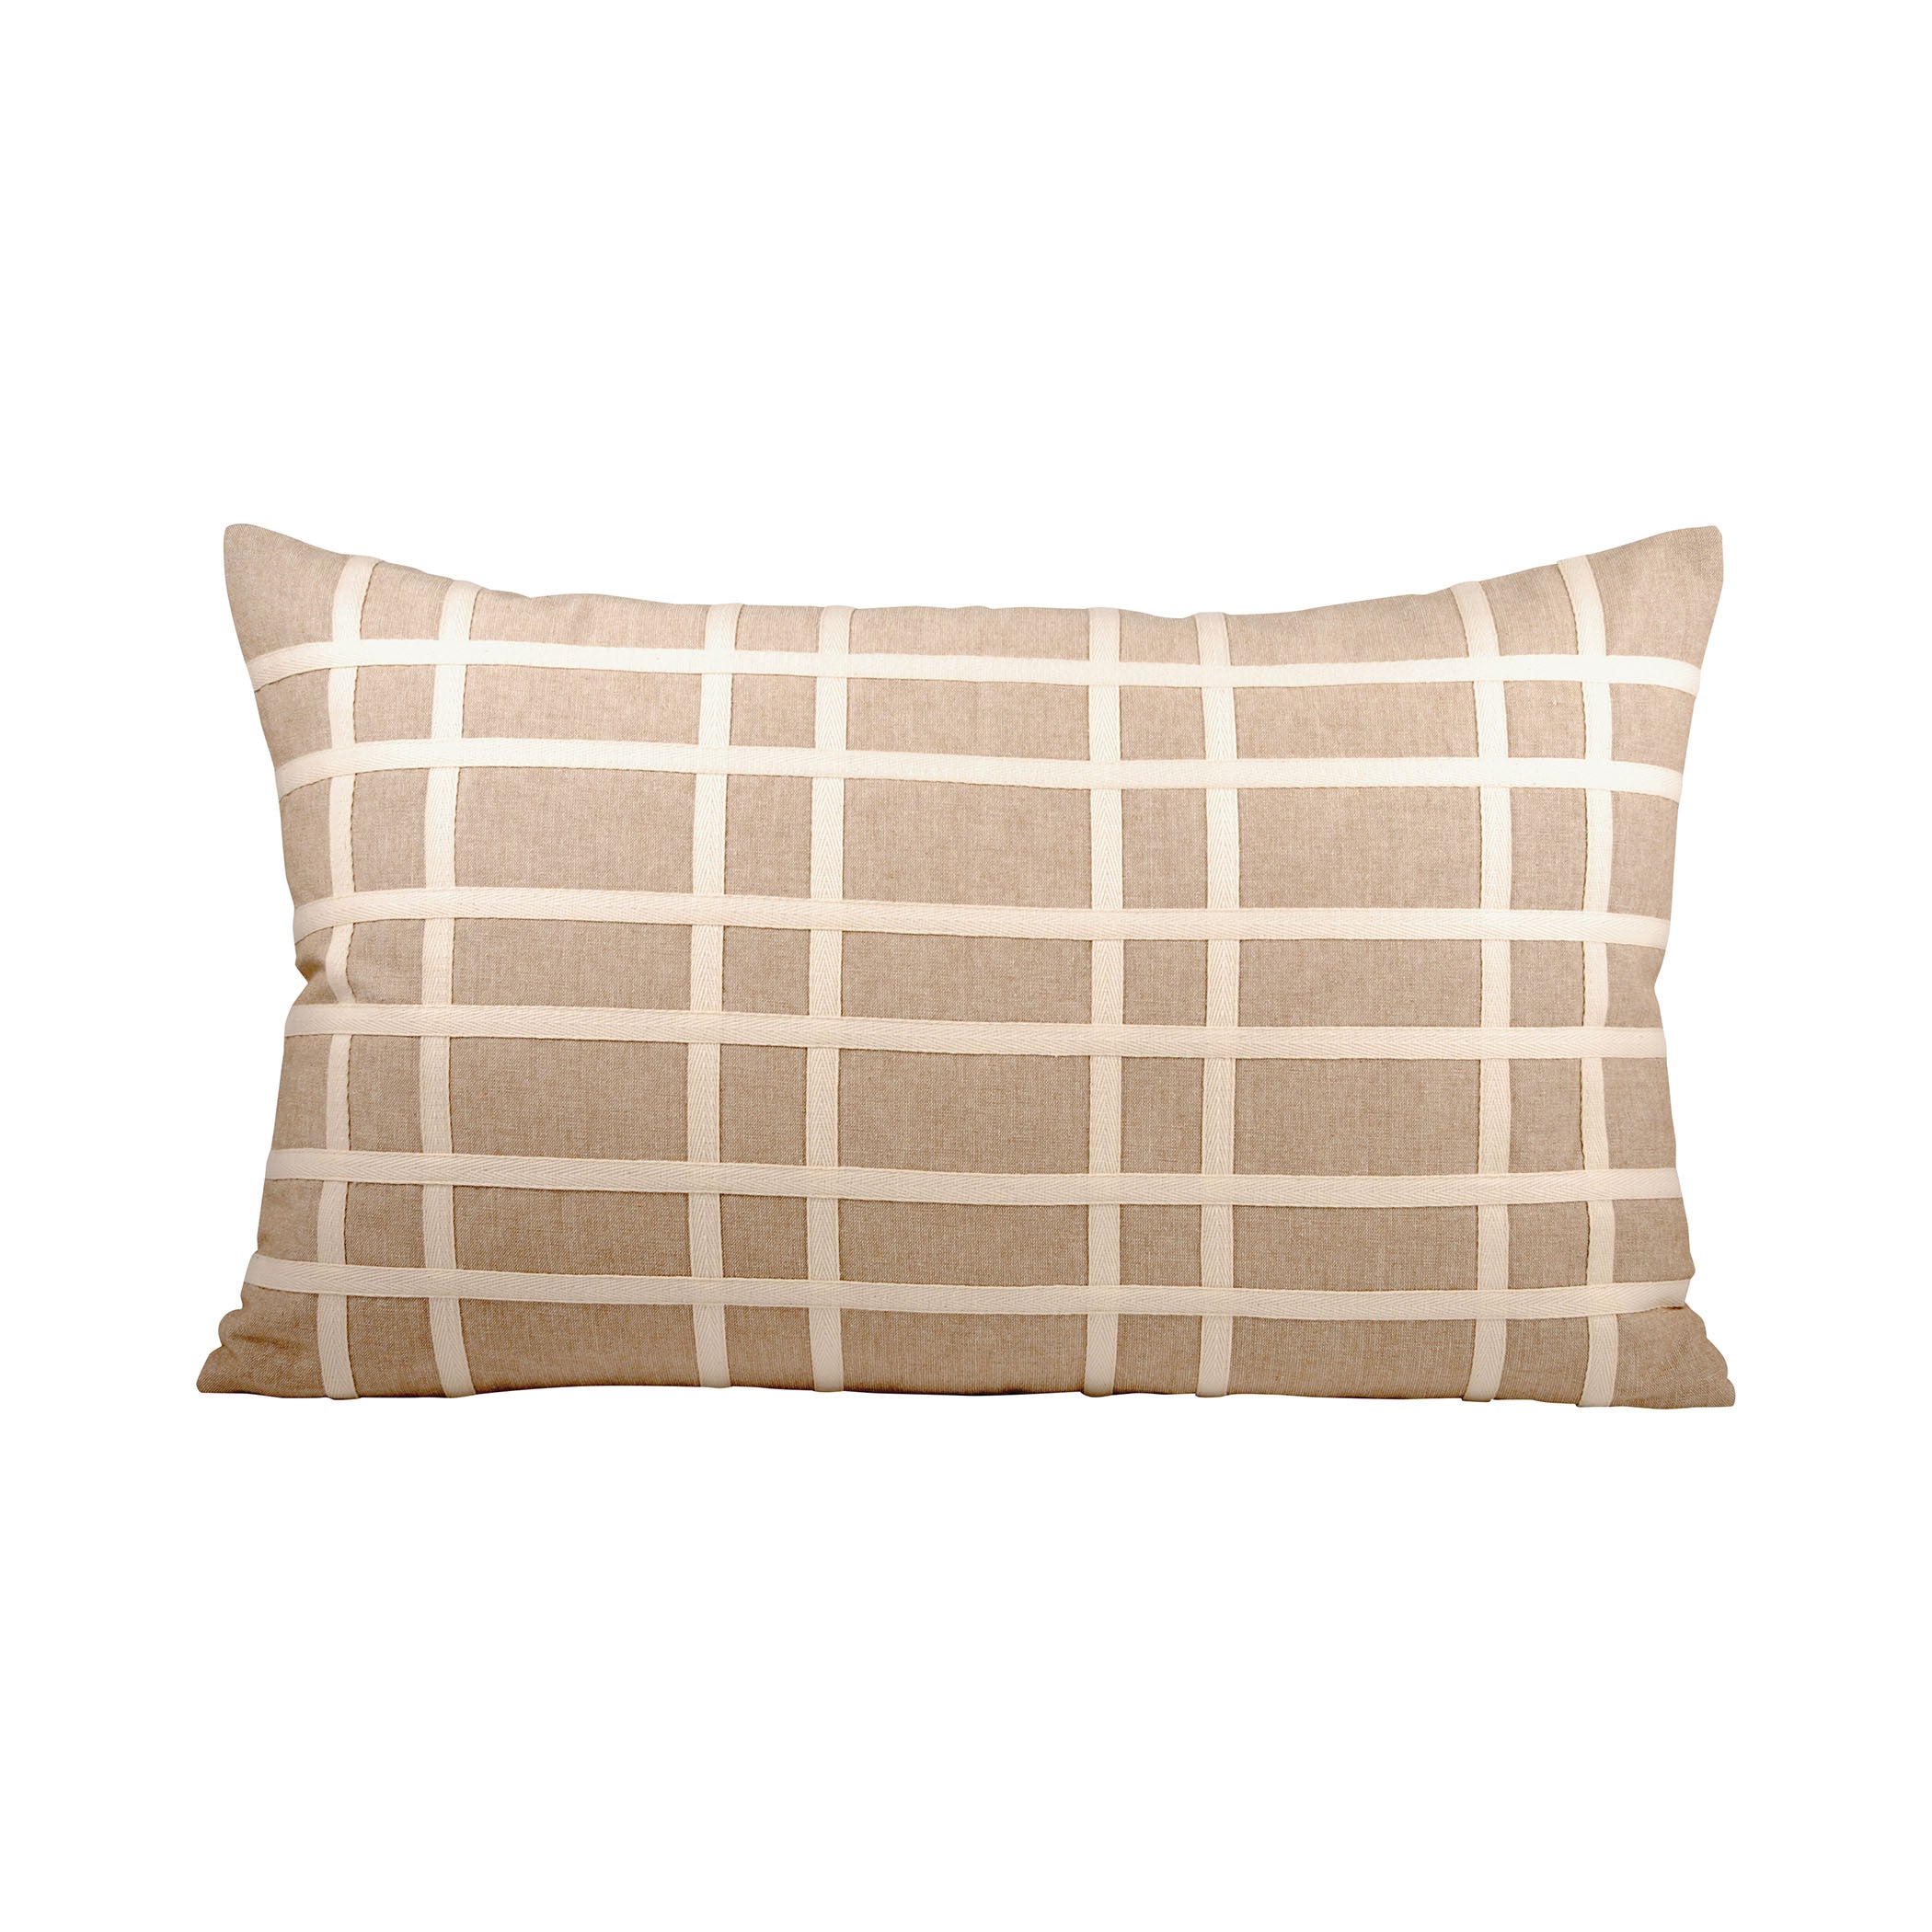 Pomeroy Pom-904226 Classique Collection Sandstone,crema Finish Pillow